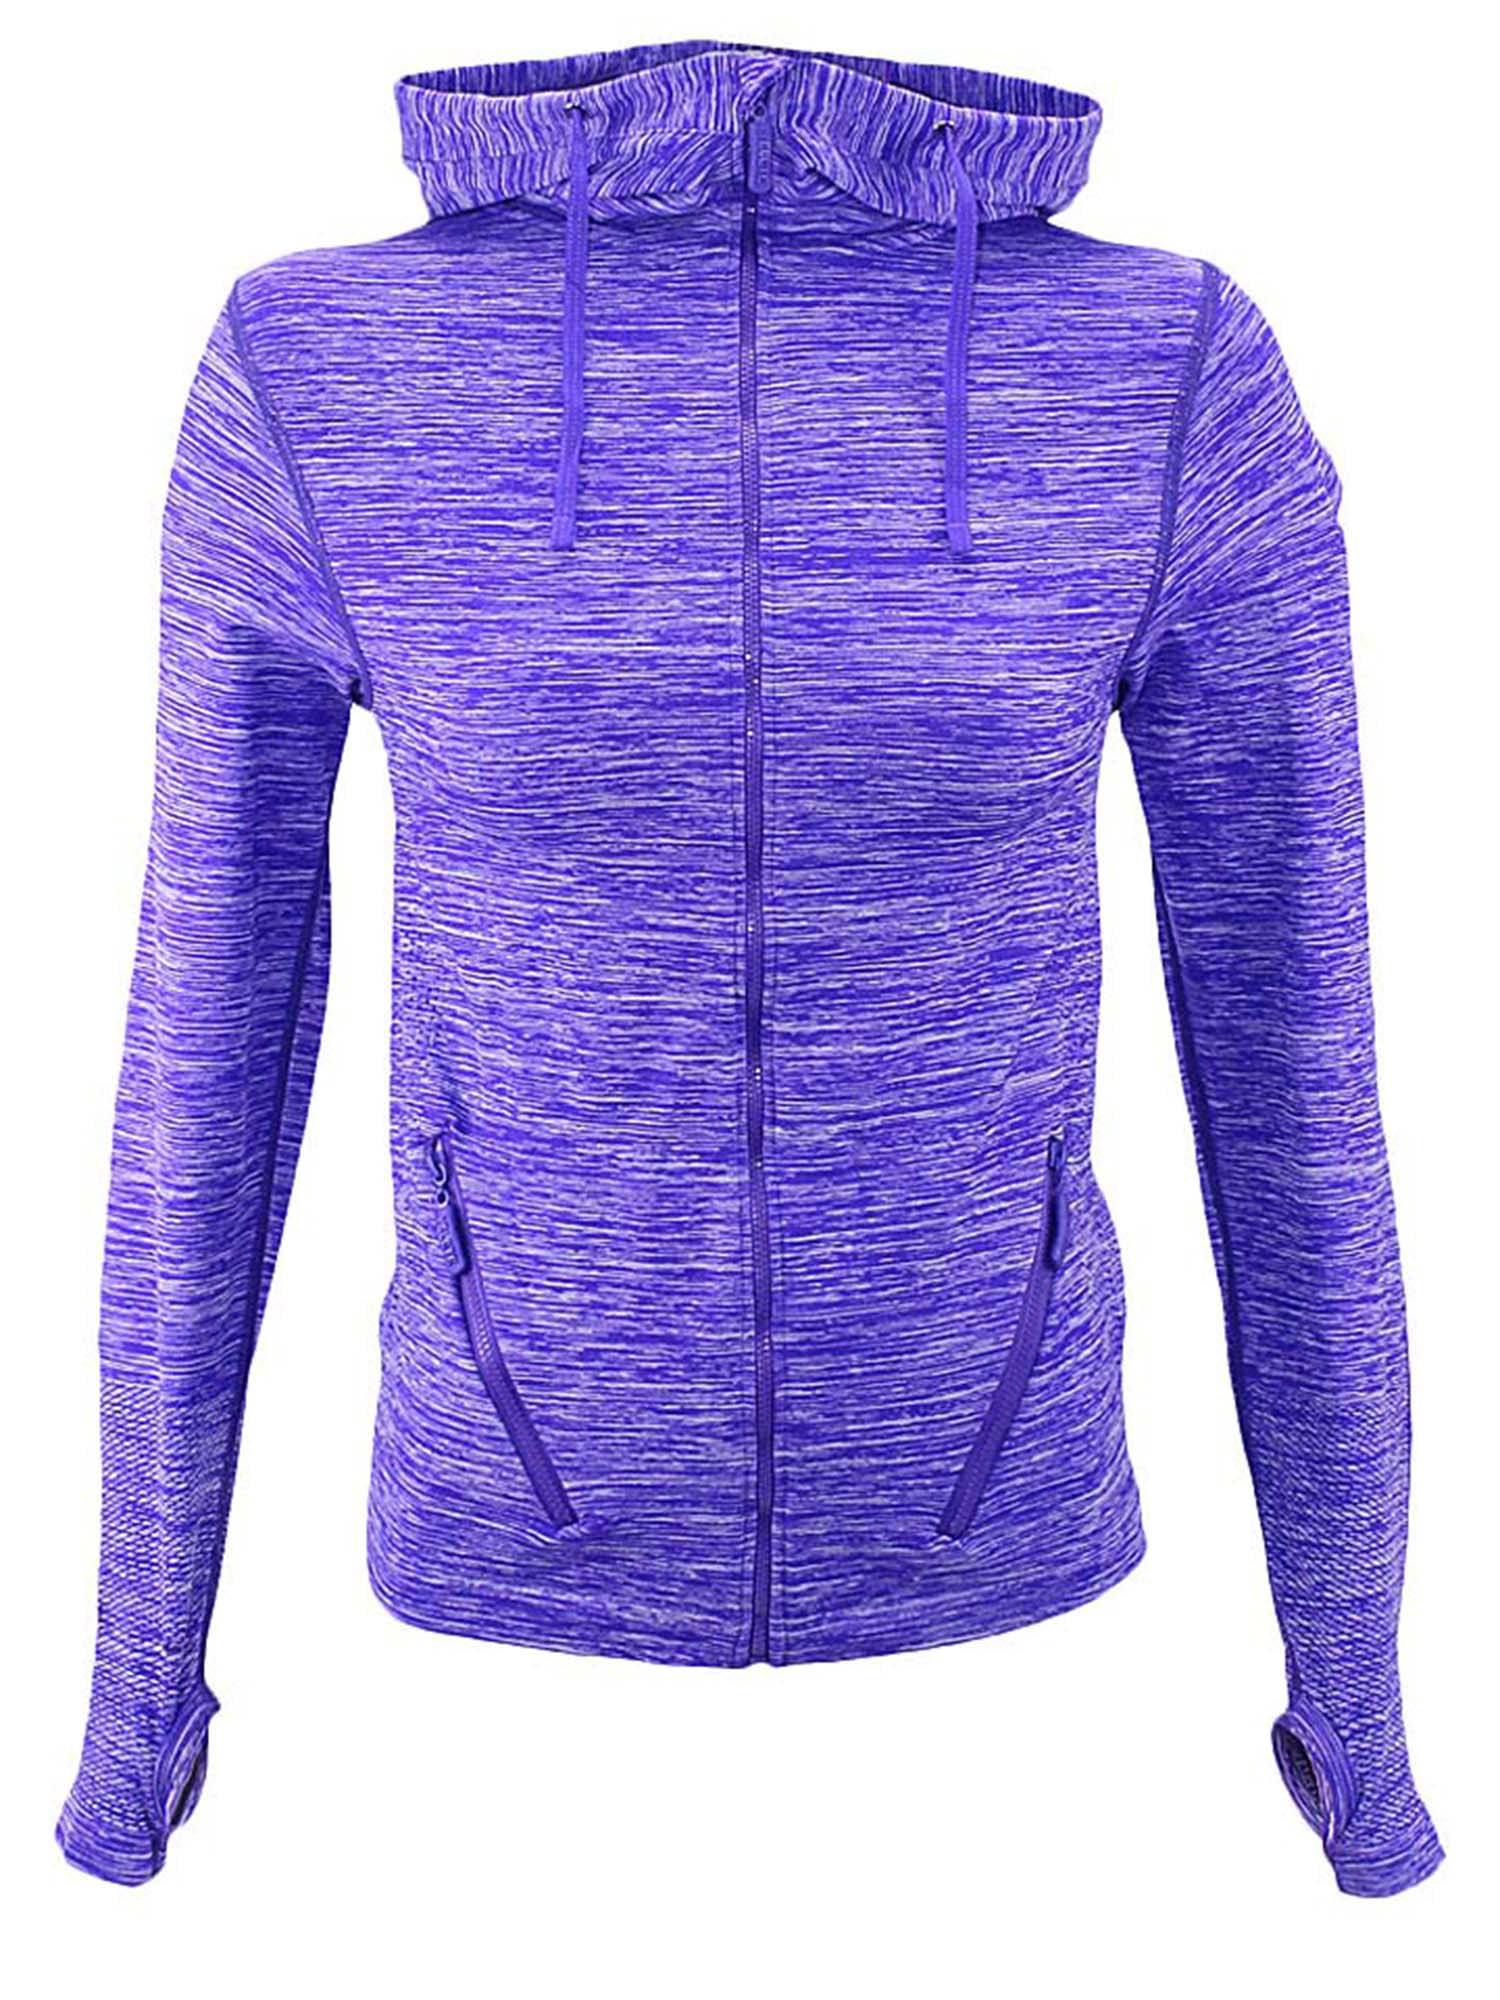 purple activewear jacket